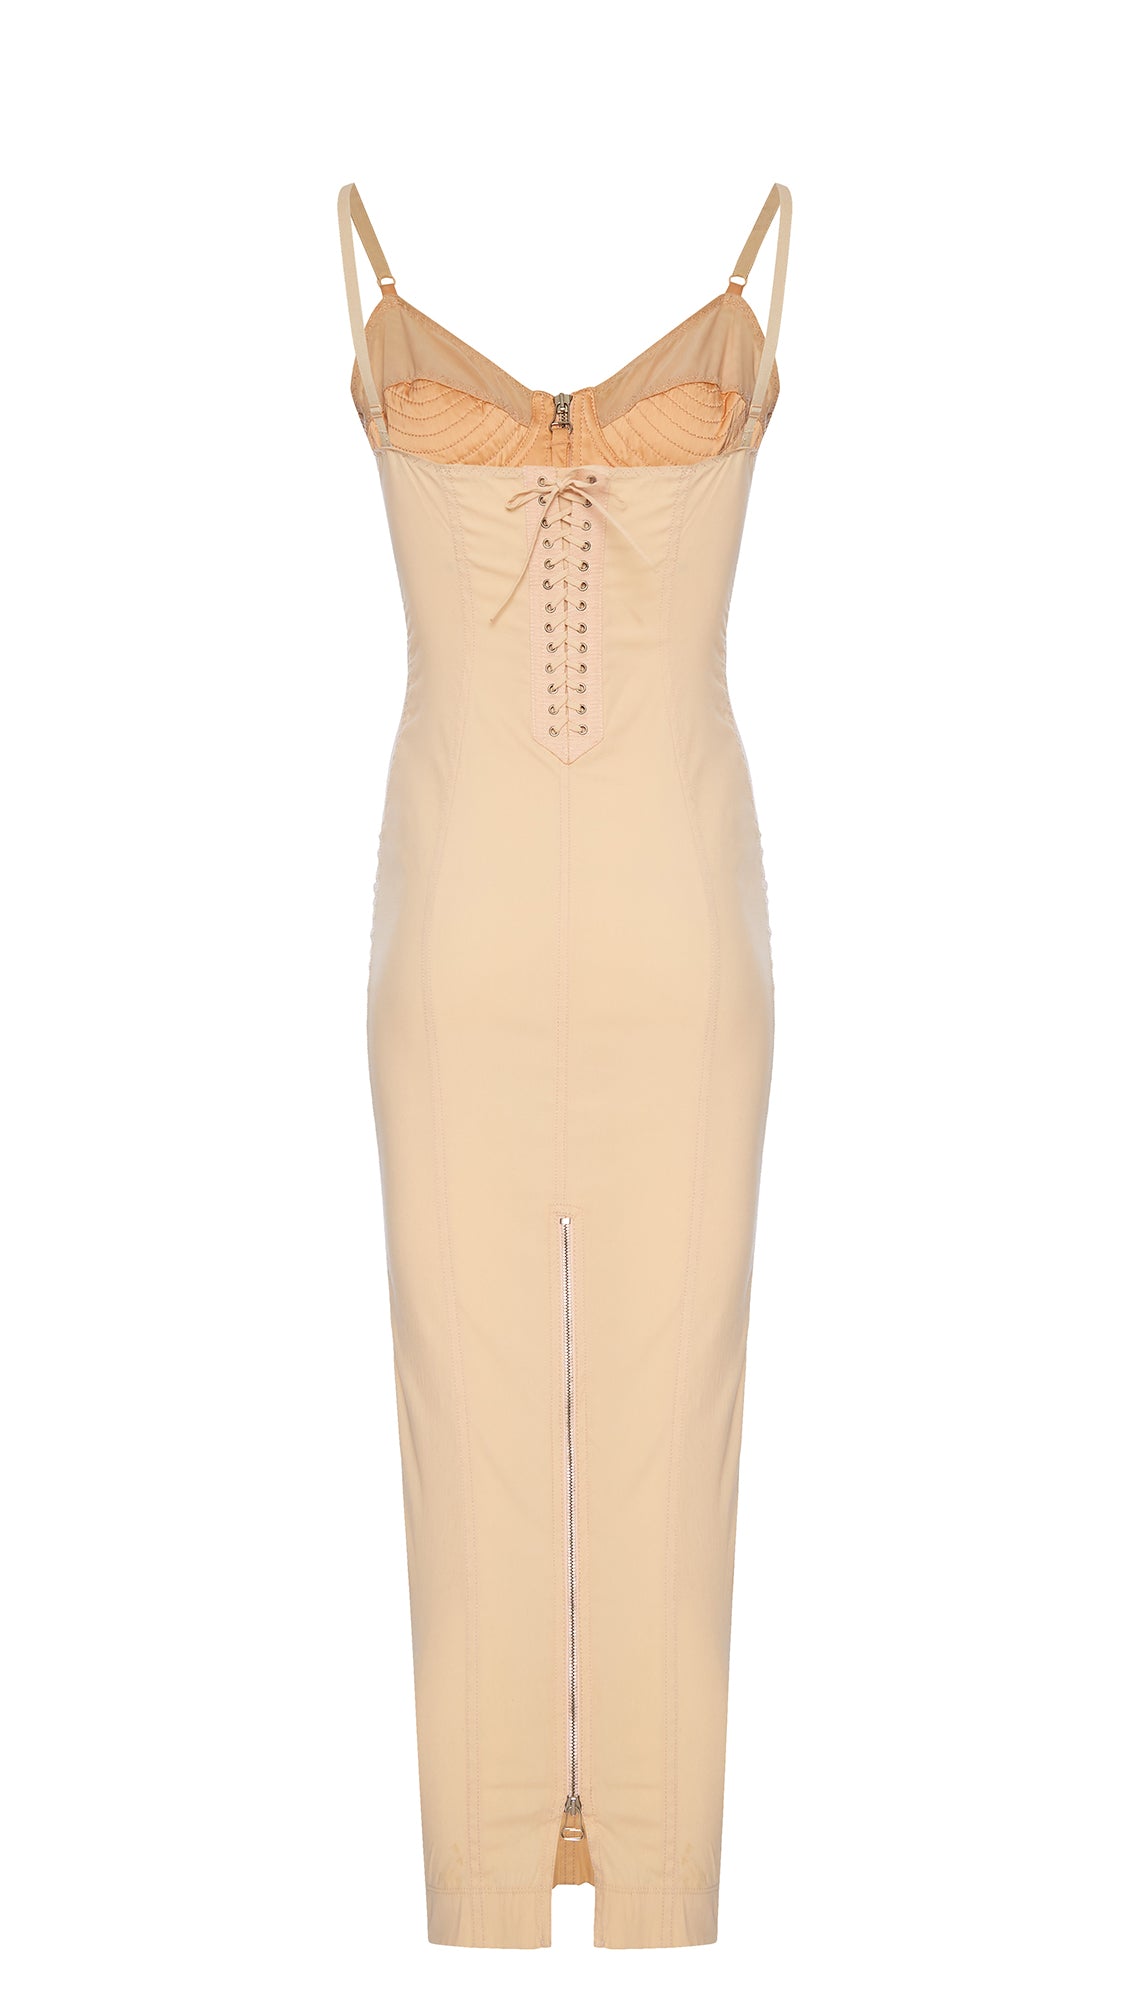 1990s Jean-Paul Gaultier Iconic Cone Bust Blush Peach Corset Dress. Rent:  £100